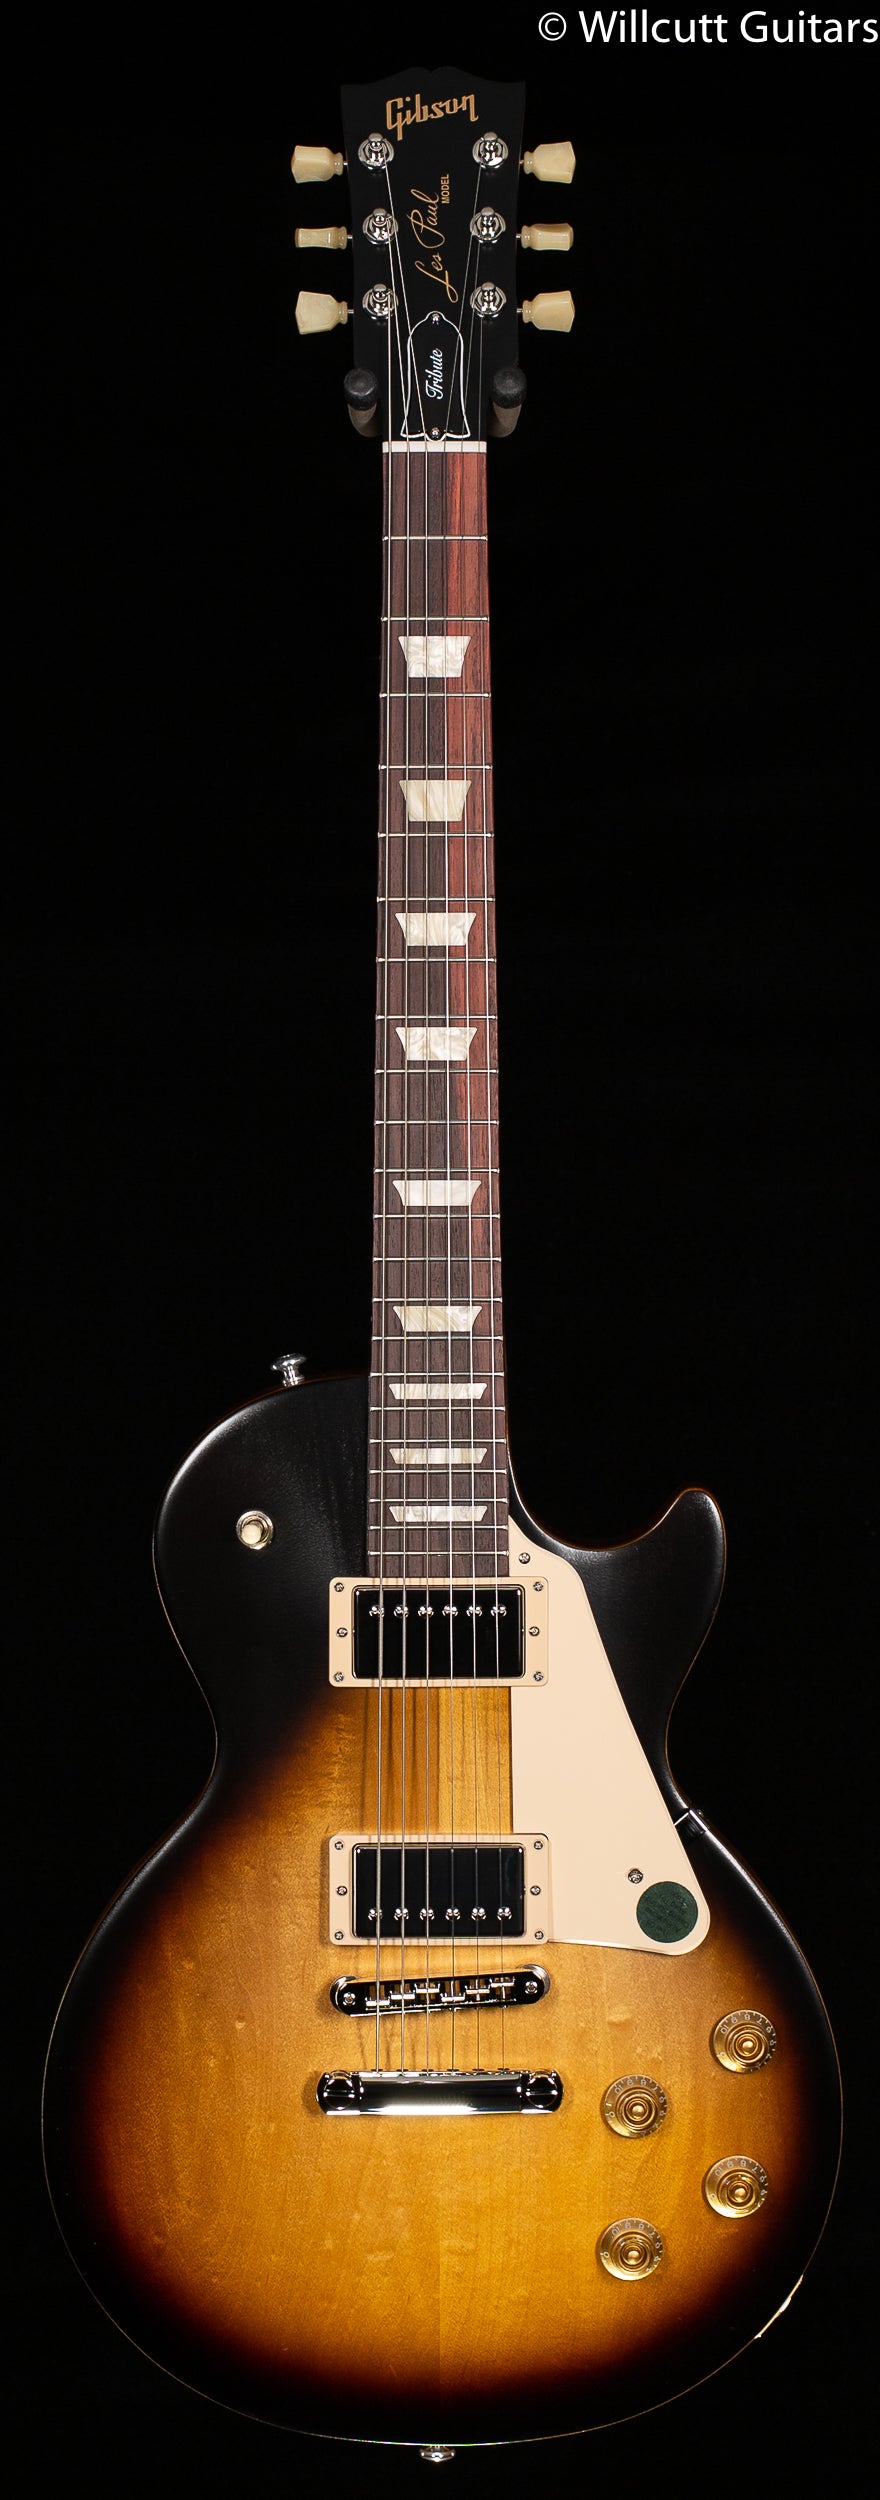 Gibson Les Paul Tribute Satin Tobacco Burst - Willcutt Guitars